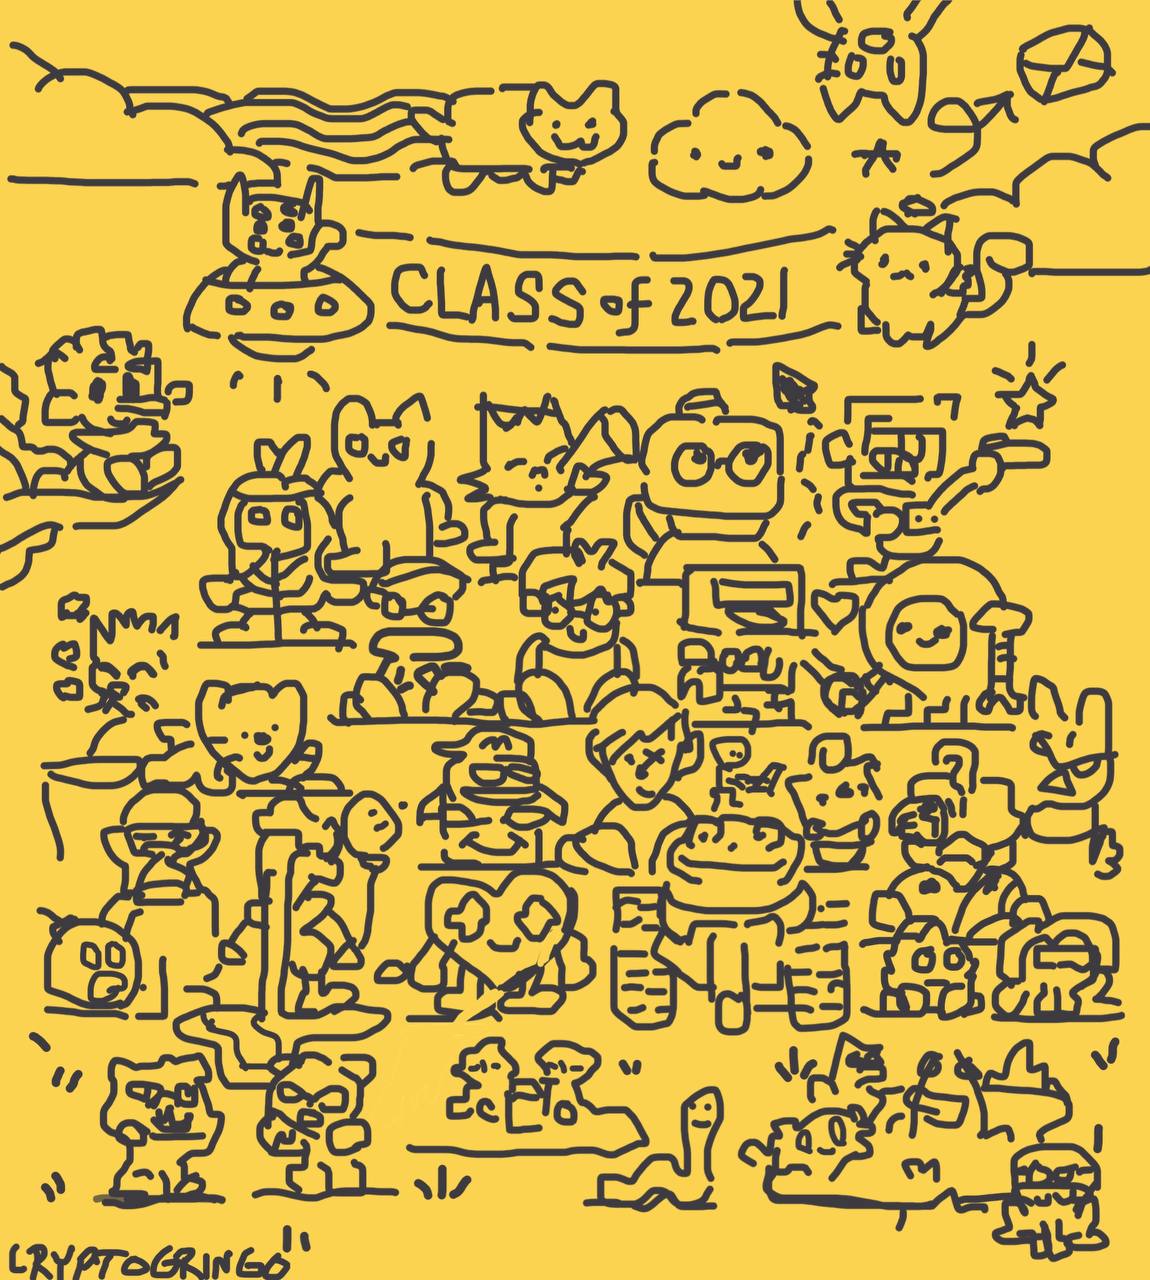 Class of 2021 